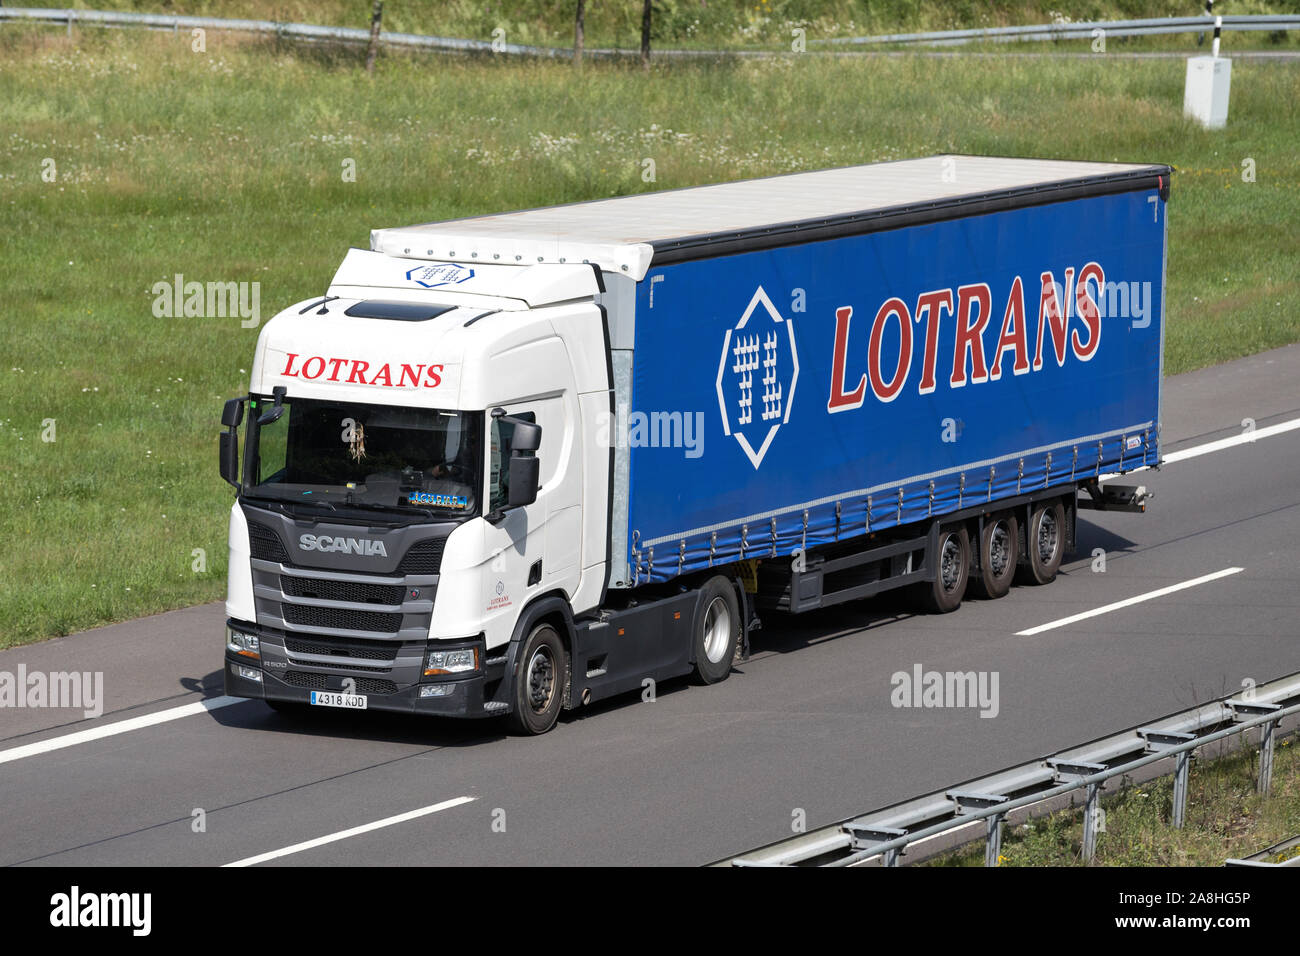 Lotrans Scania camion con rimorchio curtainside su autostrada. Foto Stock